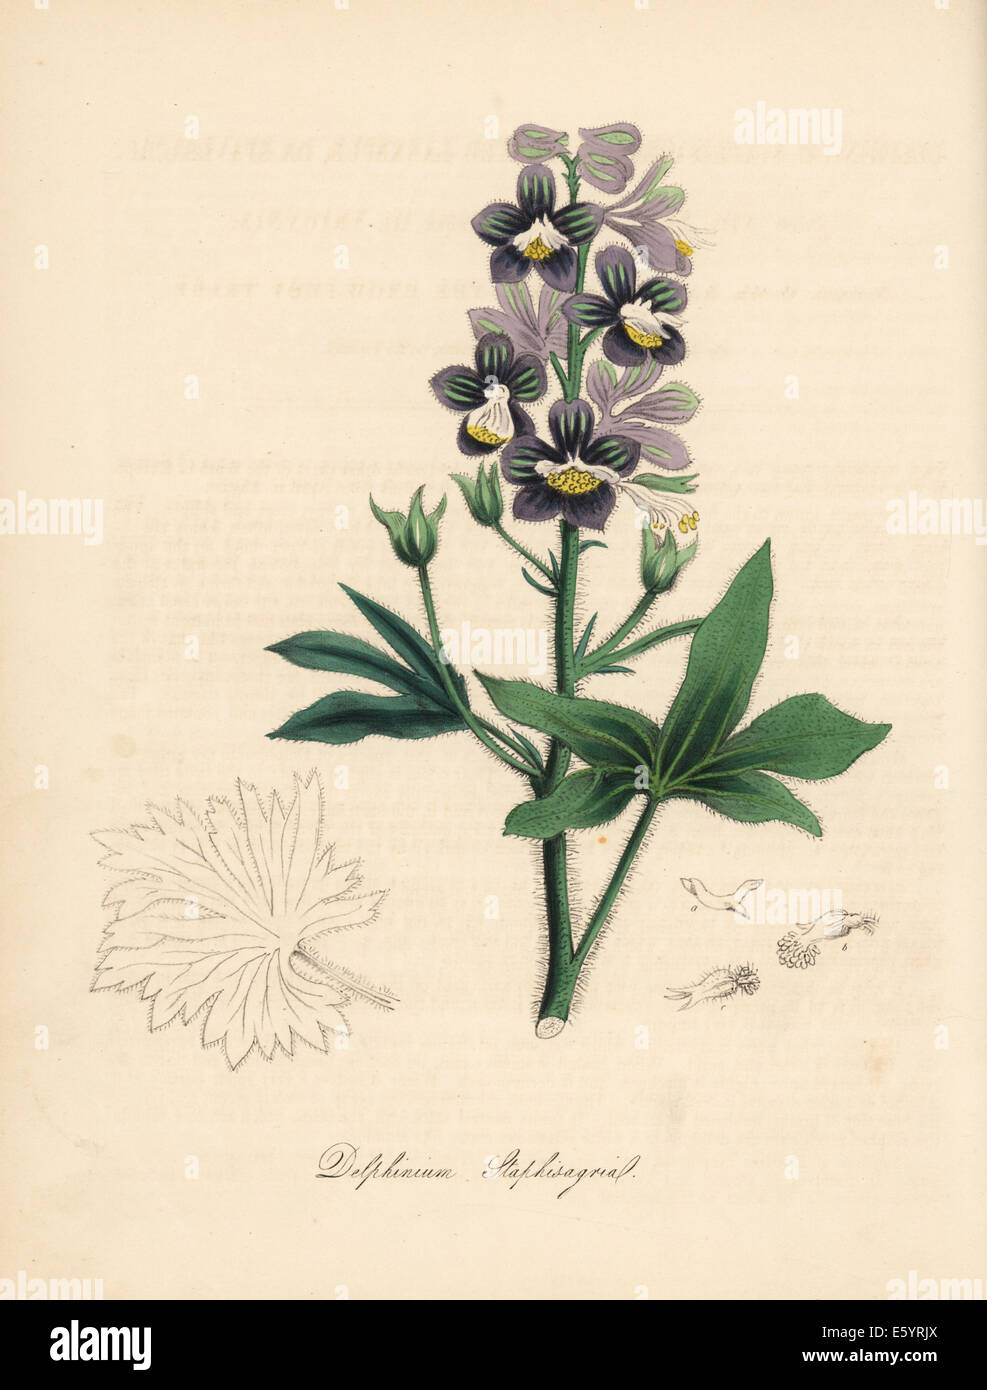 Palmated larkspur, licebane or stavesacre, Delphinium staphisagria. Stock Photo